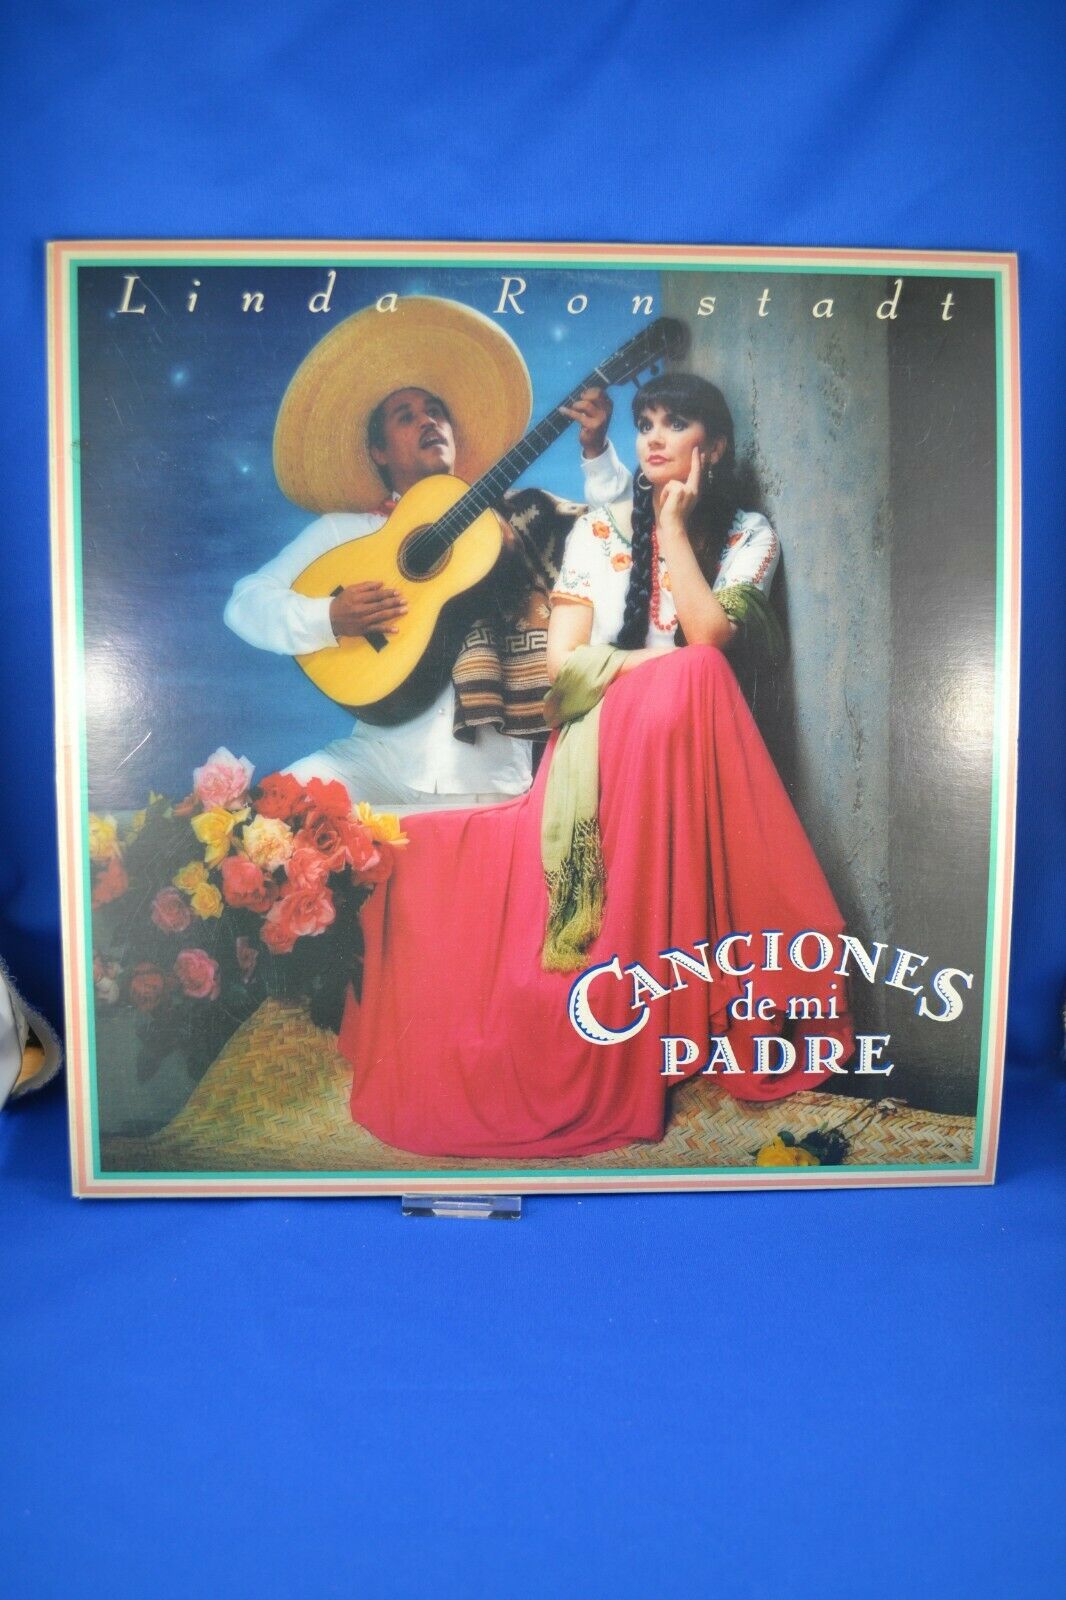  - Linda Ronstadt Canciones De Mi Padre LP ORIGINAL INNER SLEEVE  EX COND - auction details